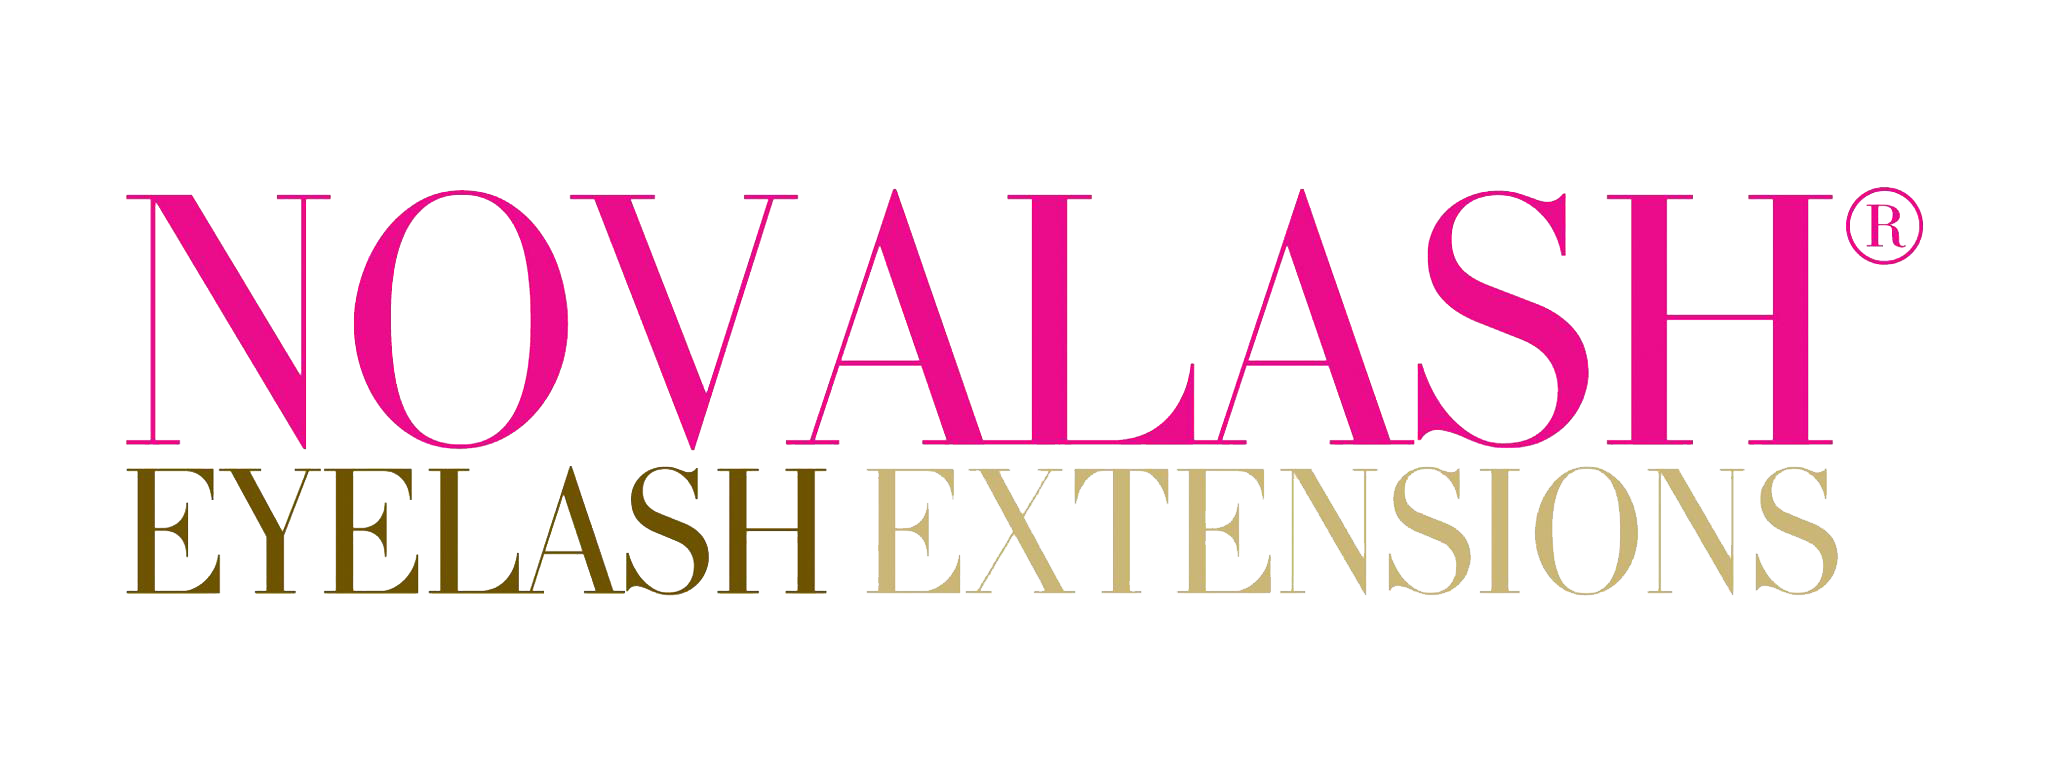 Novalash Eyelash Extensions Logo